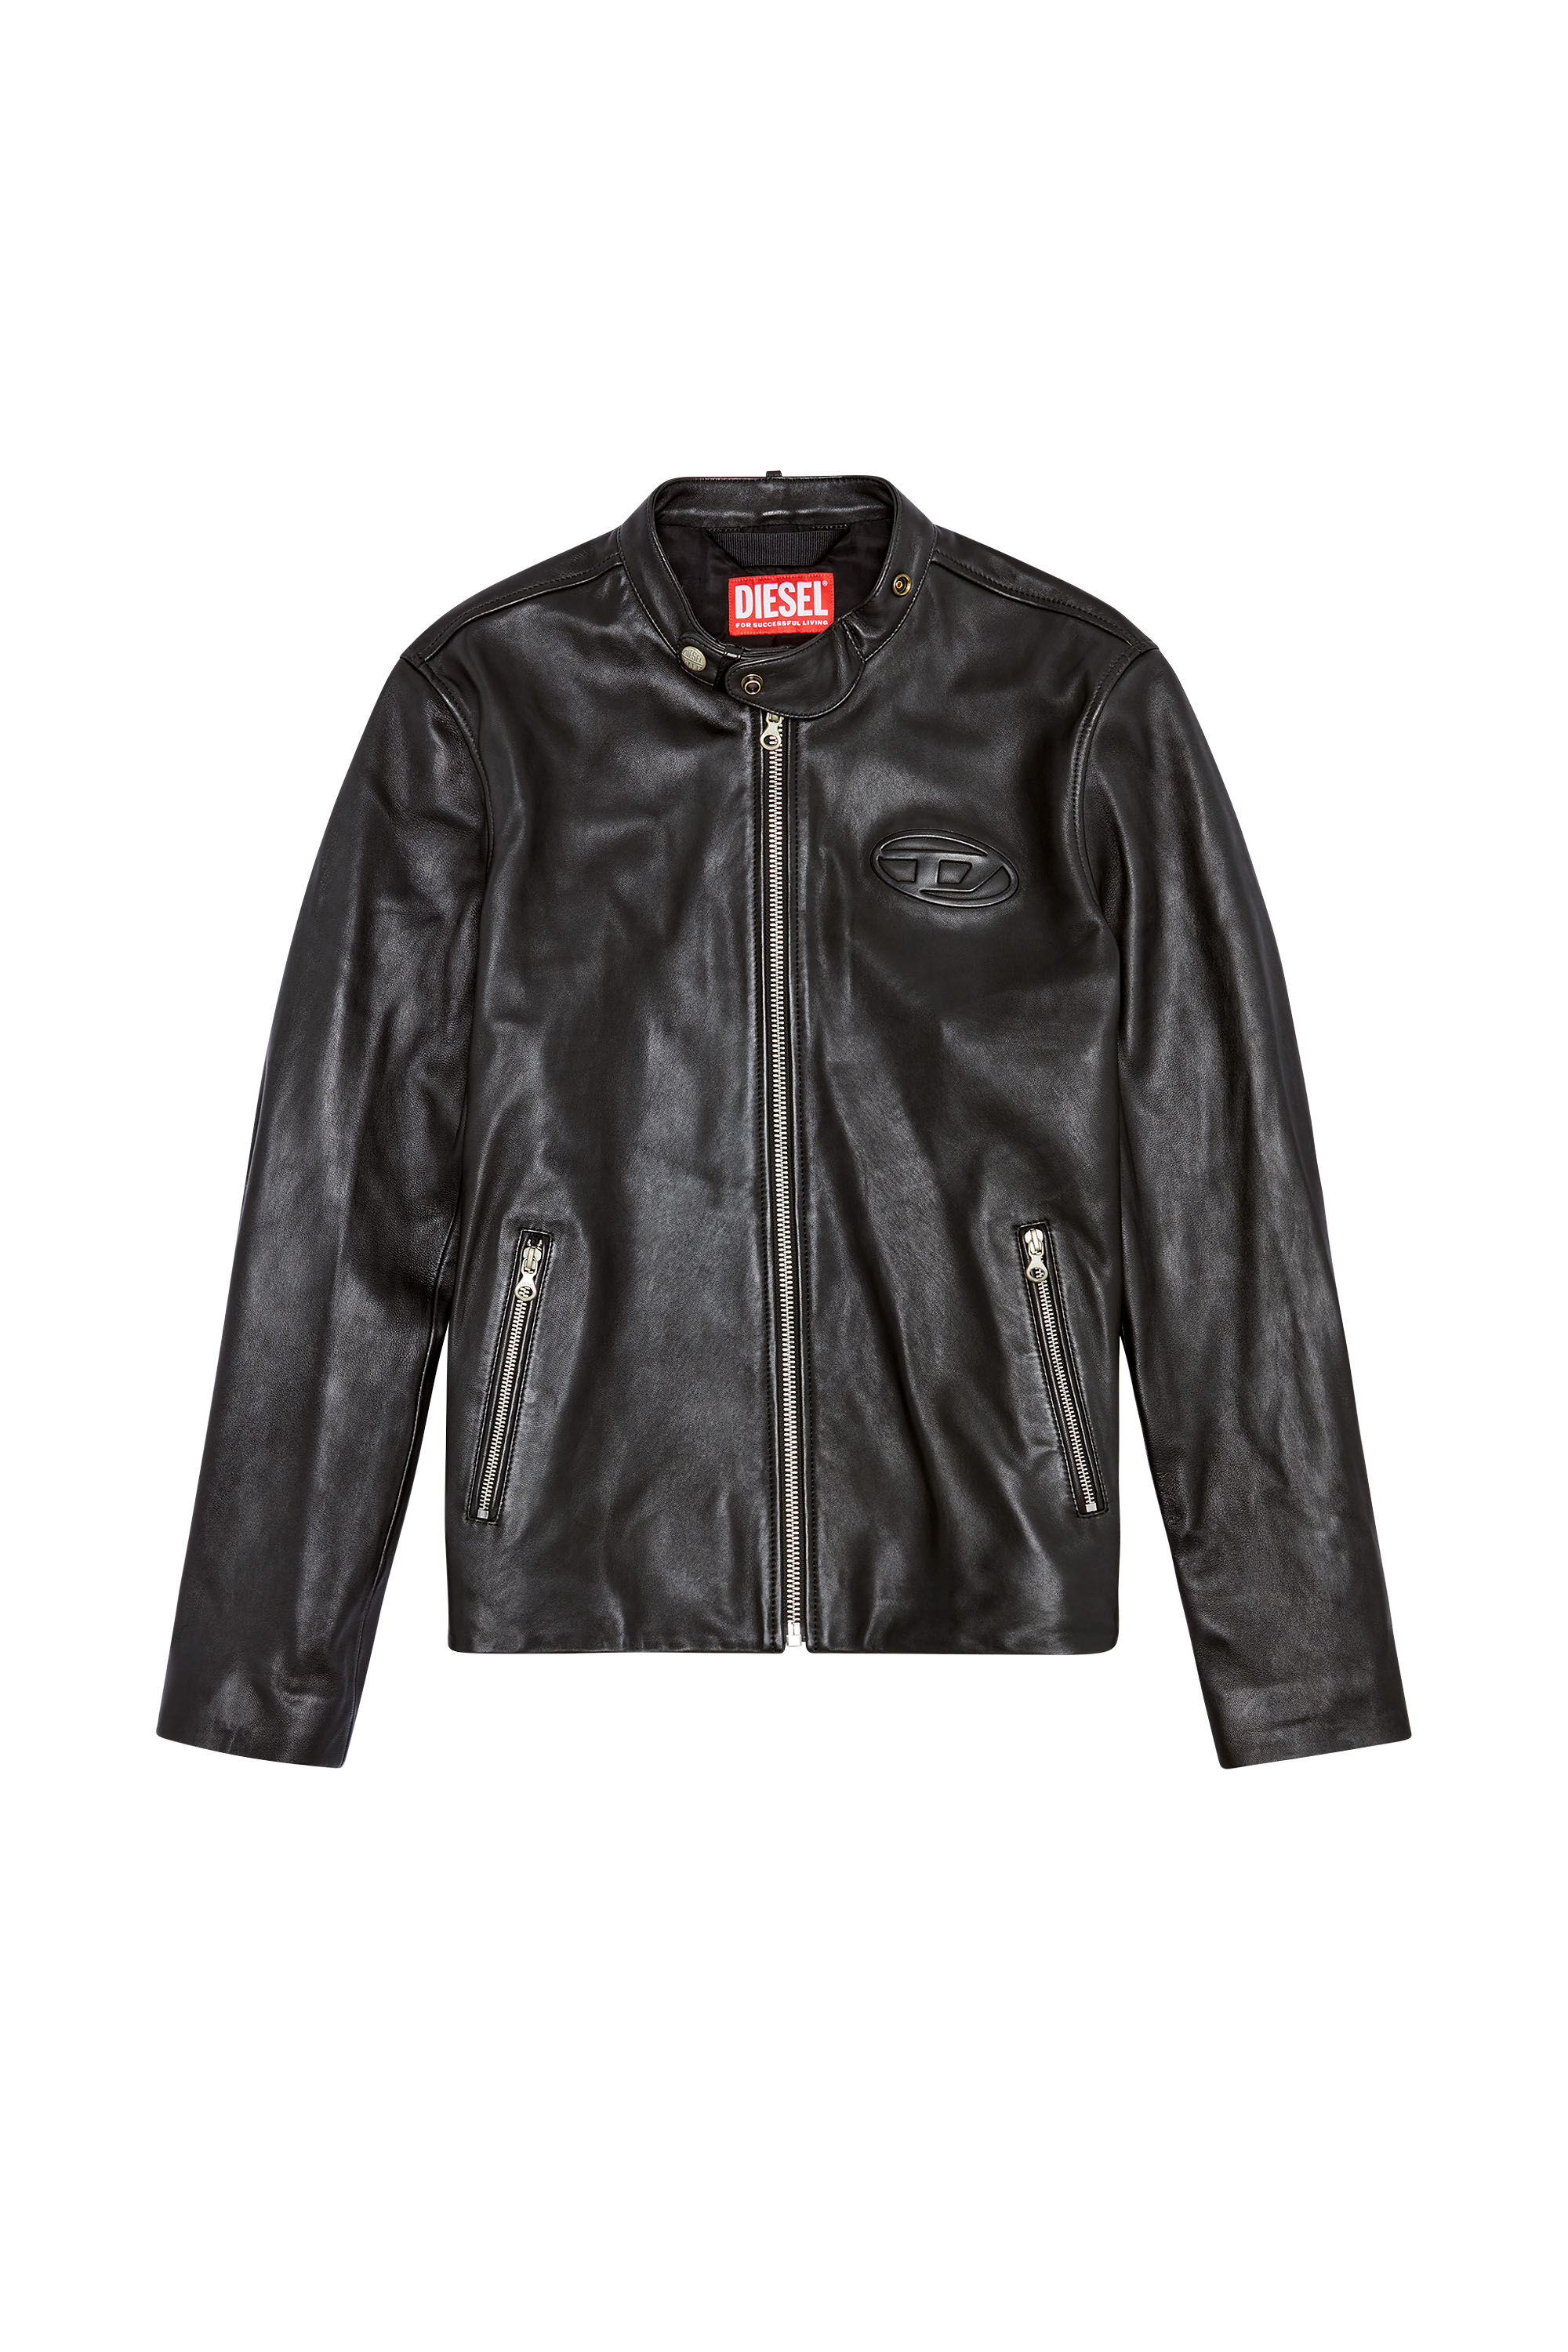 Men's Leather biker jacket with distressed logo | Black | Diesel